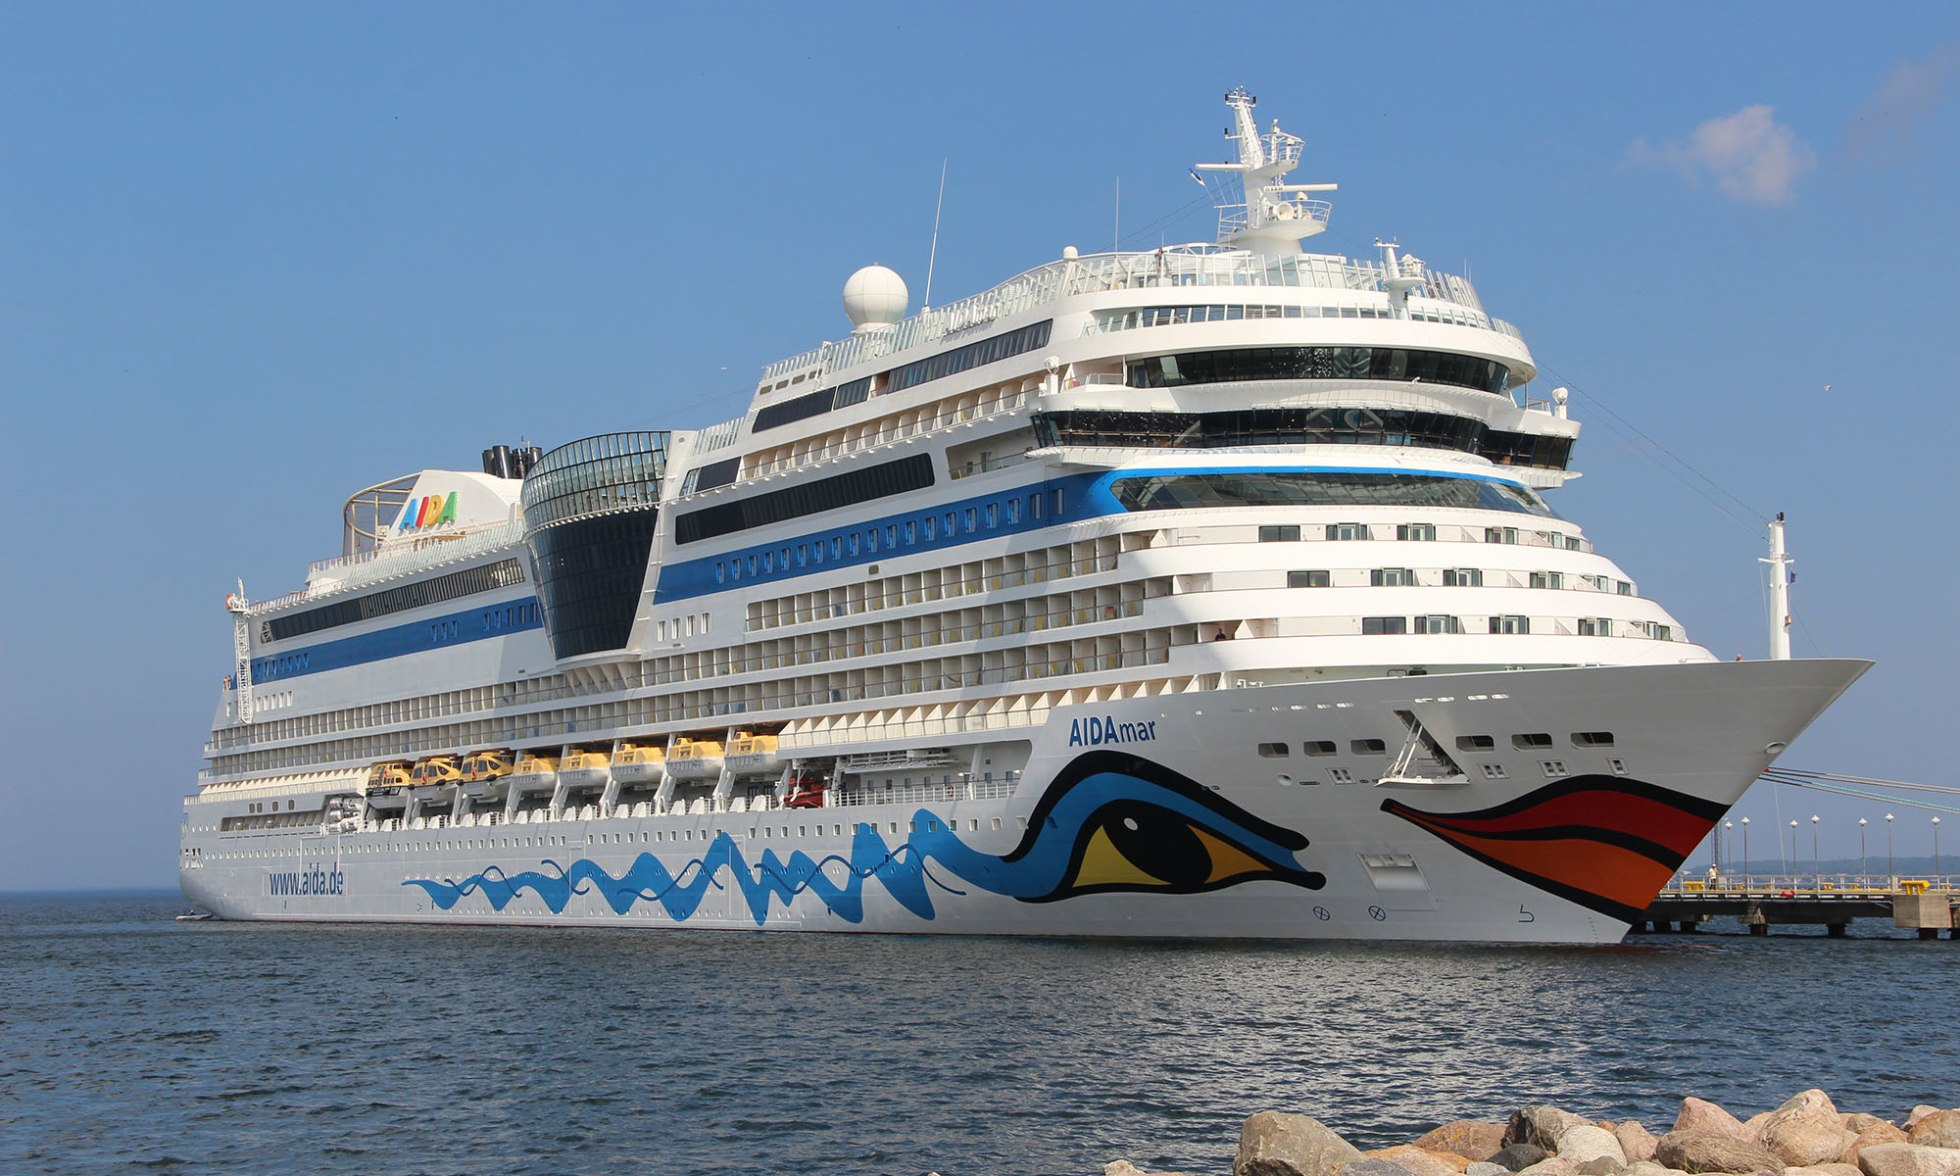 AIDAmar Cruise Ship All Itineraries & Reviews